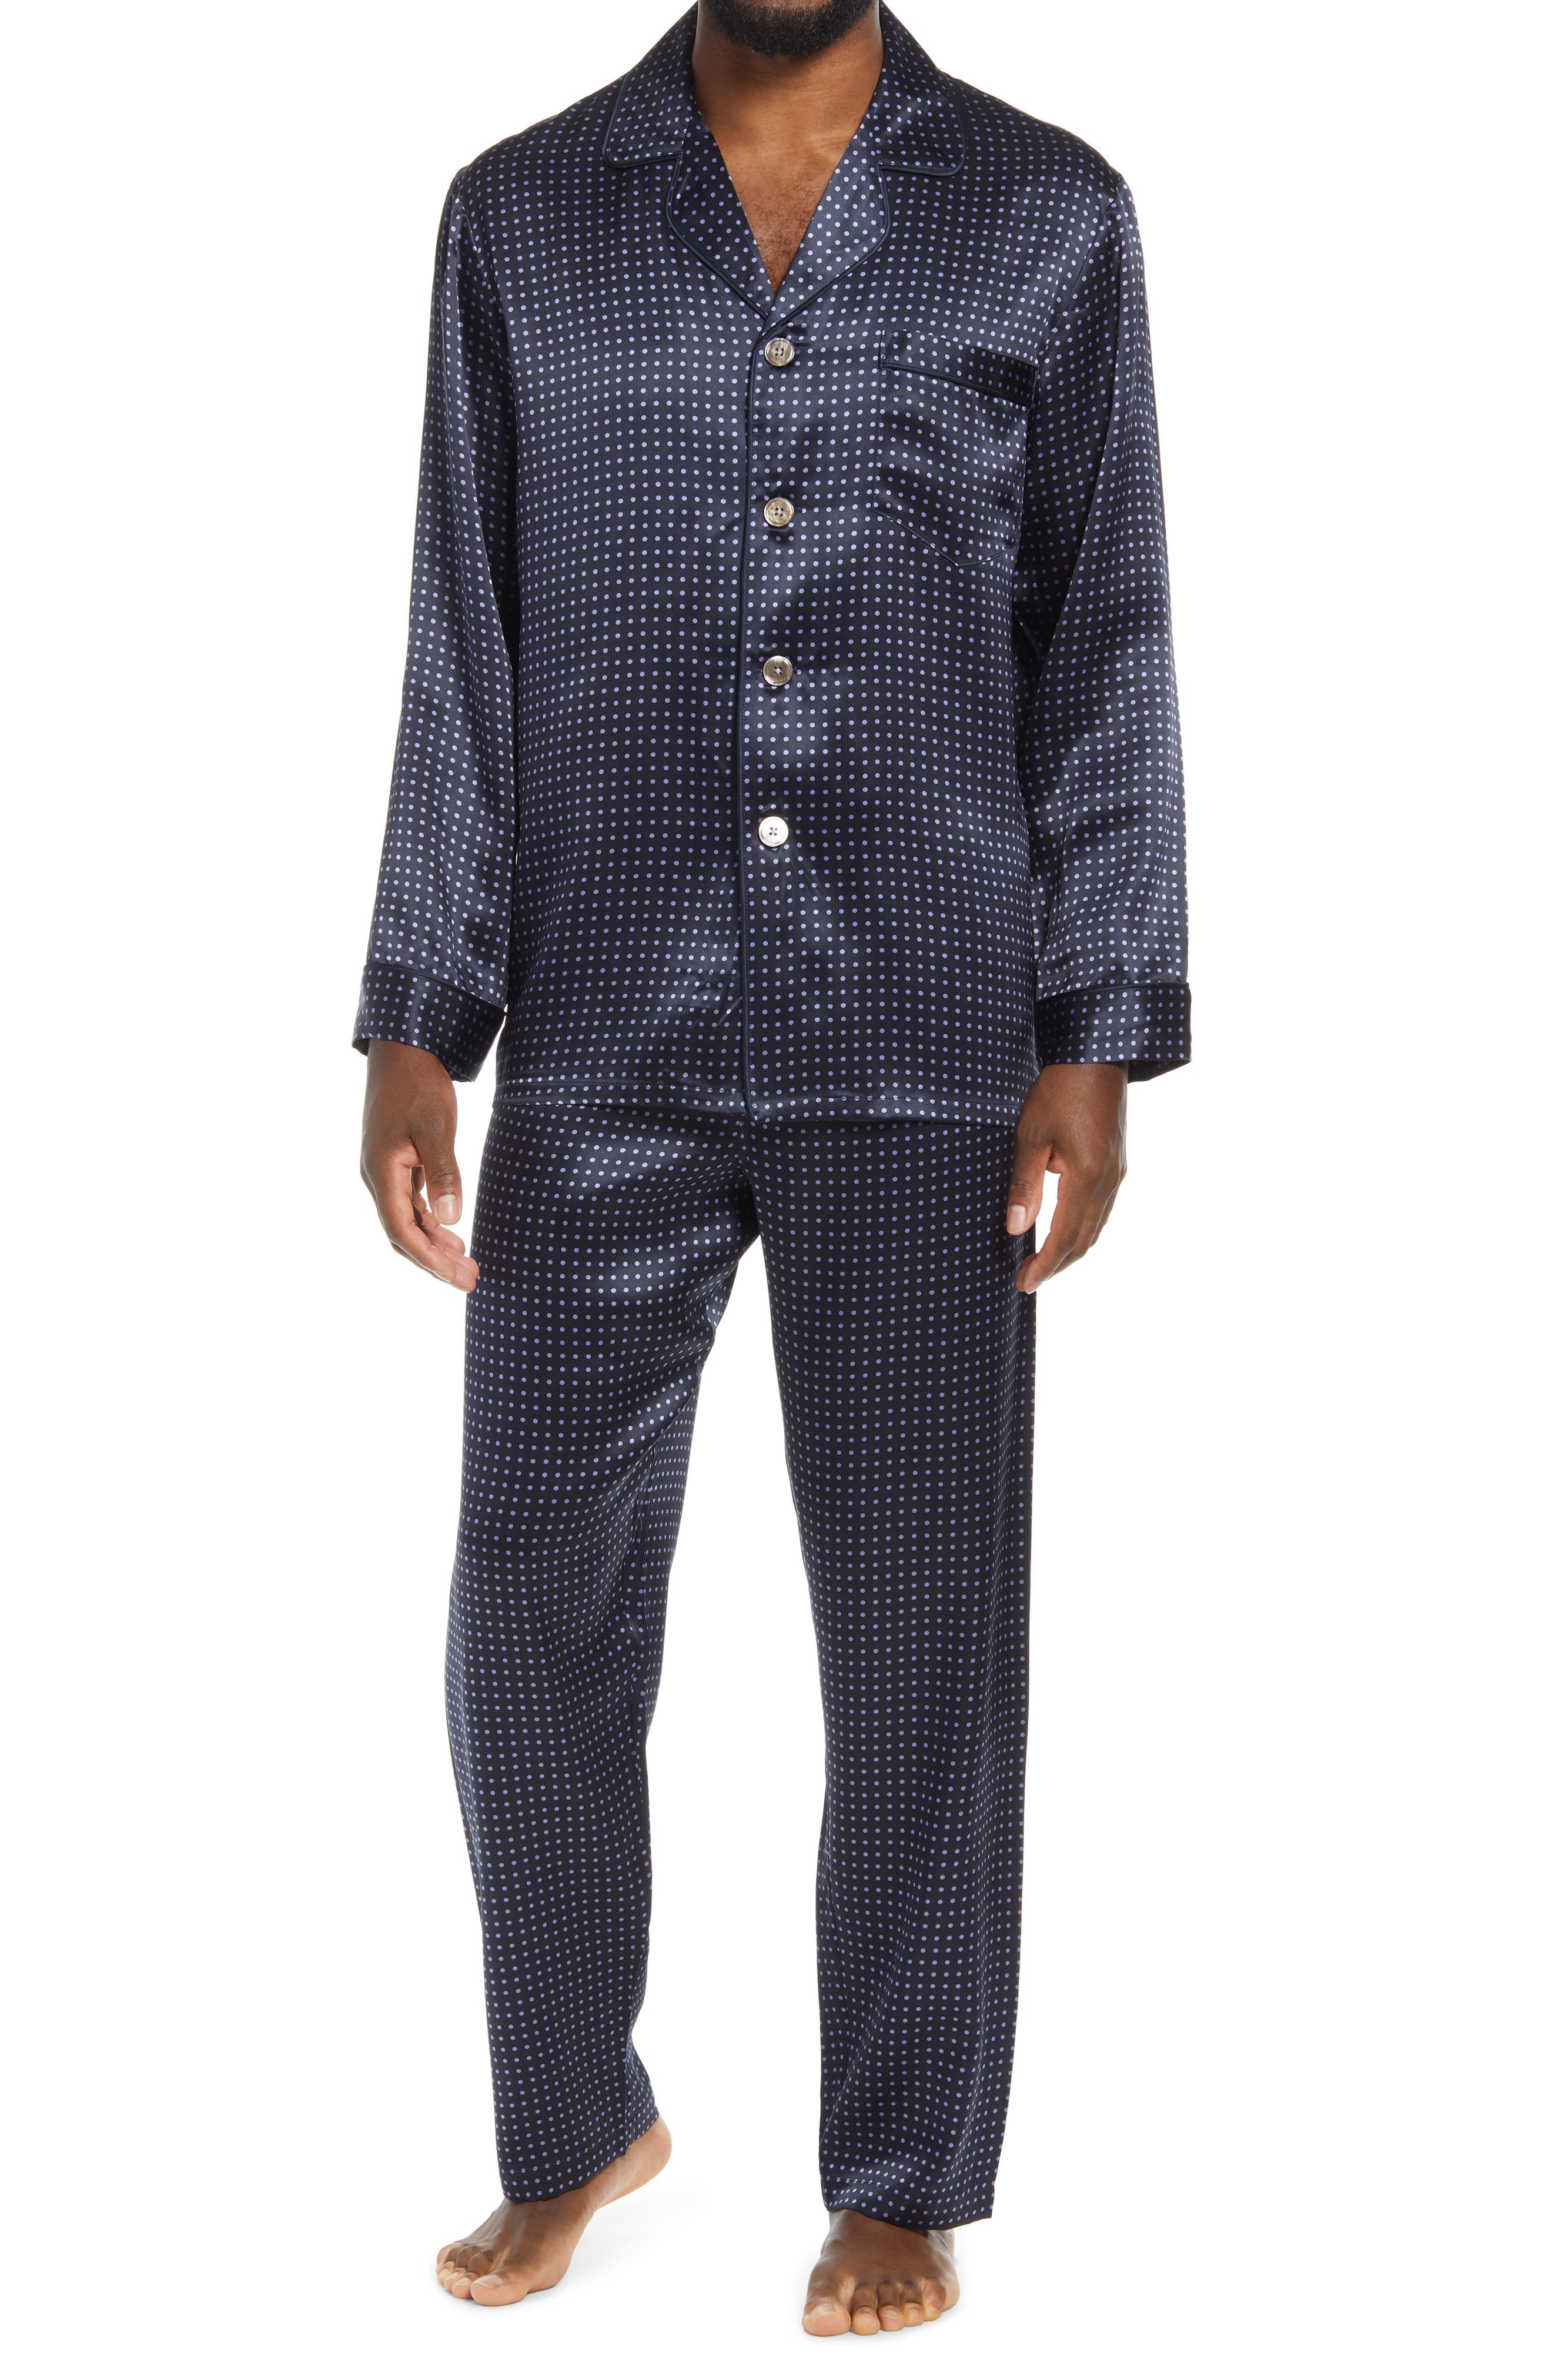 Kleding Herenkleding Pyjamas & Badjassen Sets Mens Vintage NORDSTROM 2 Piece 100% Silk Pajama Set Black Chevron Size XXL 